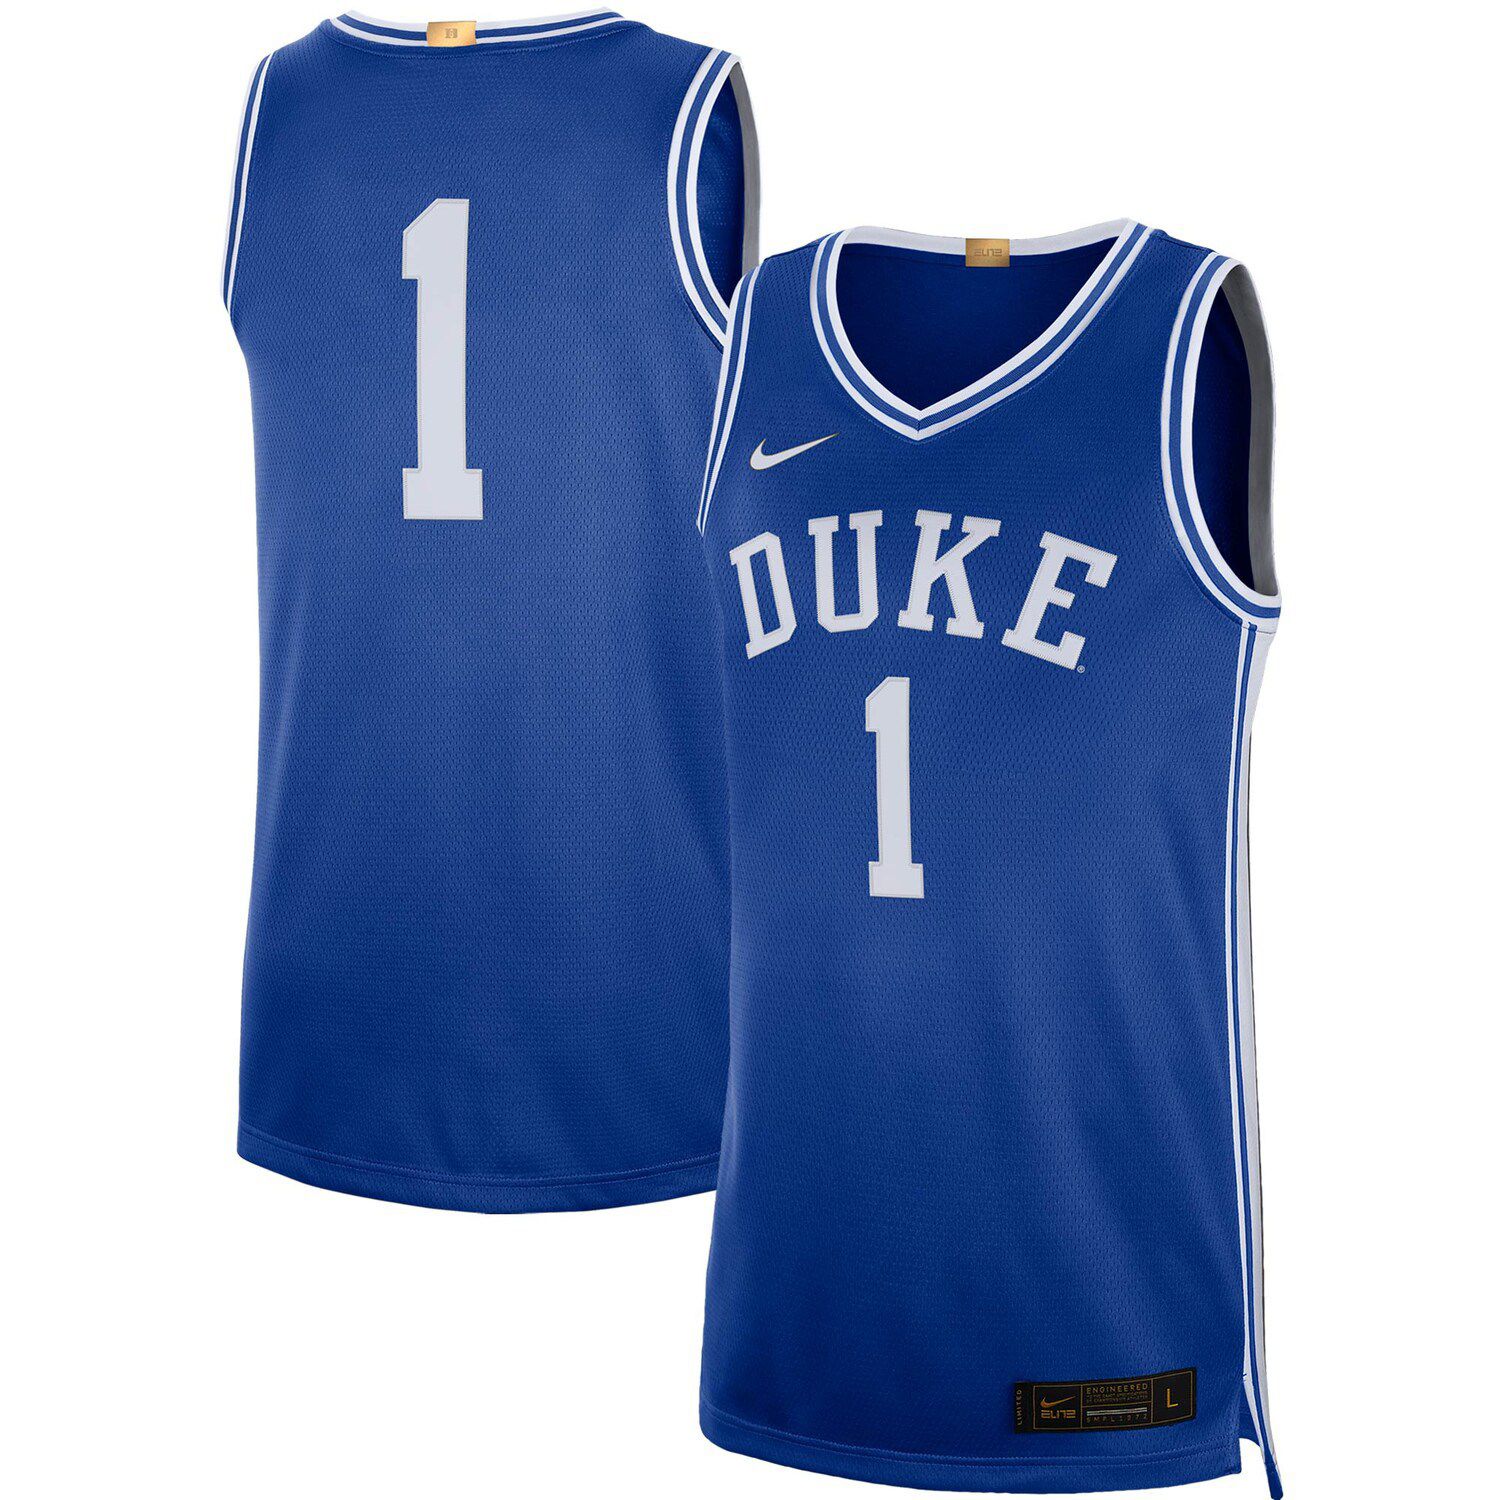 Duke Blue Devils Limited Basketball Jersey